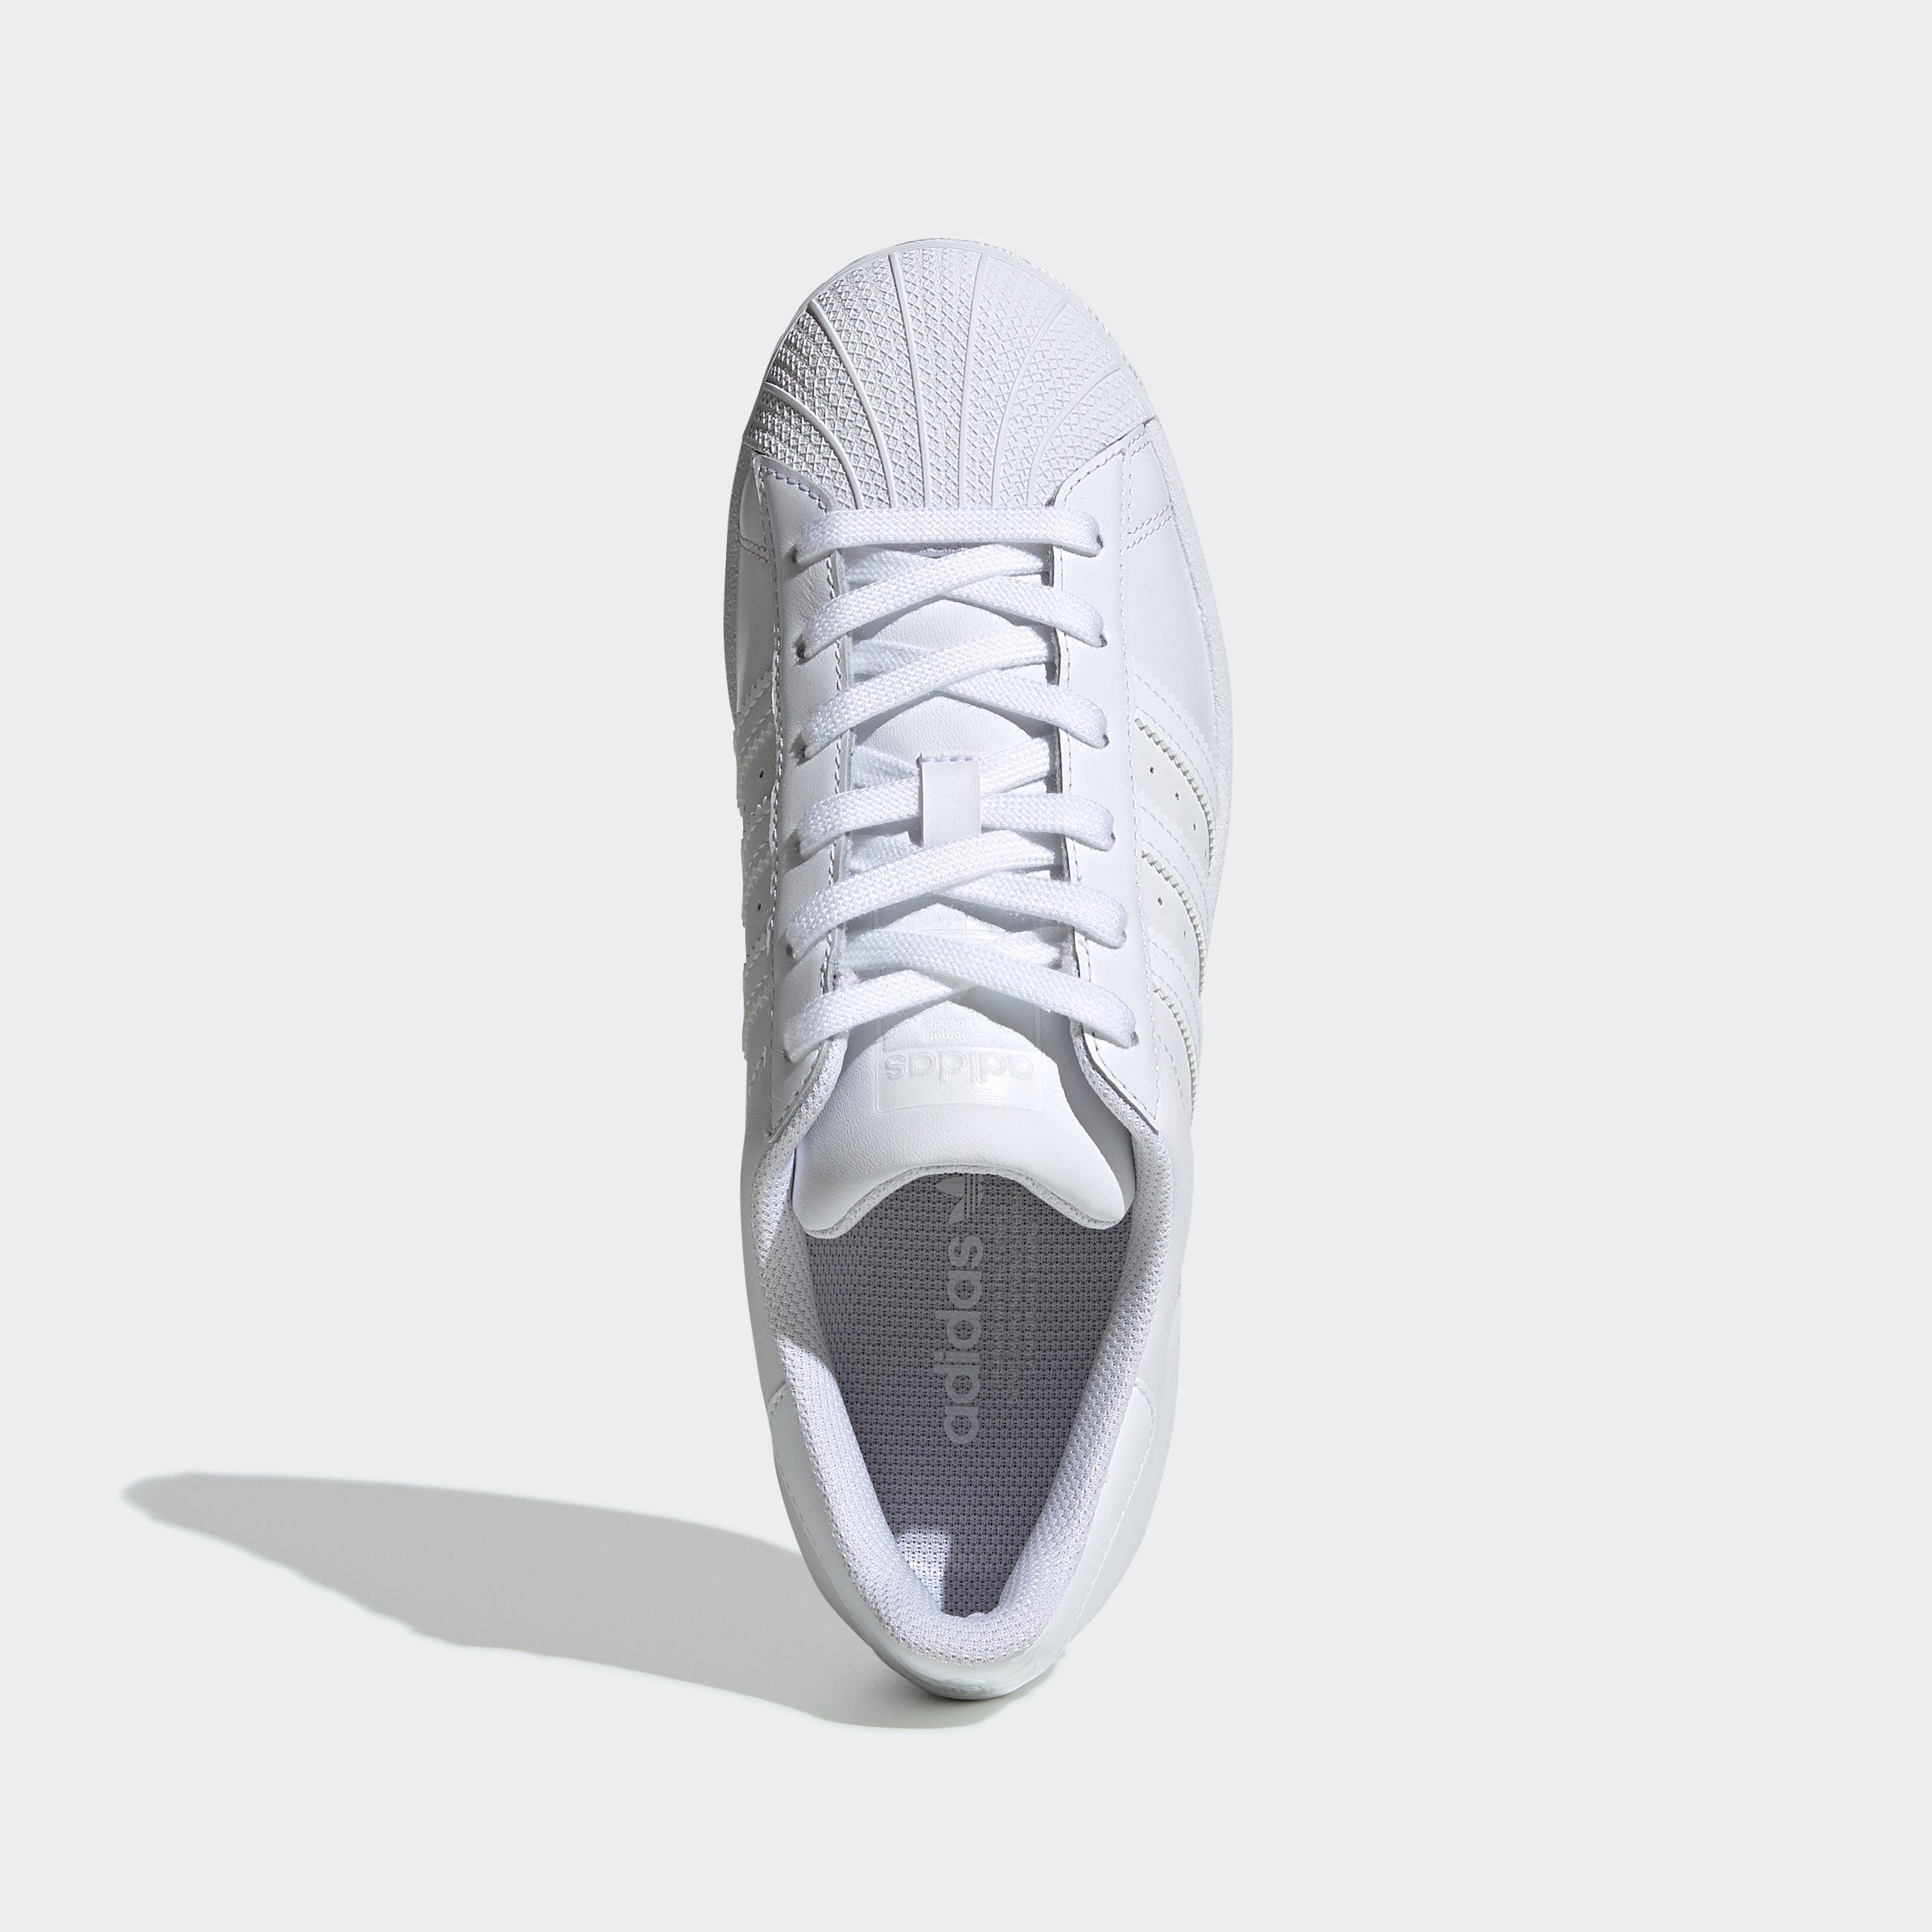 Originals Cloud SUPERSTAR / White Cloud White Sneaker / White Cloud adidas